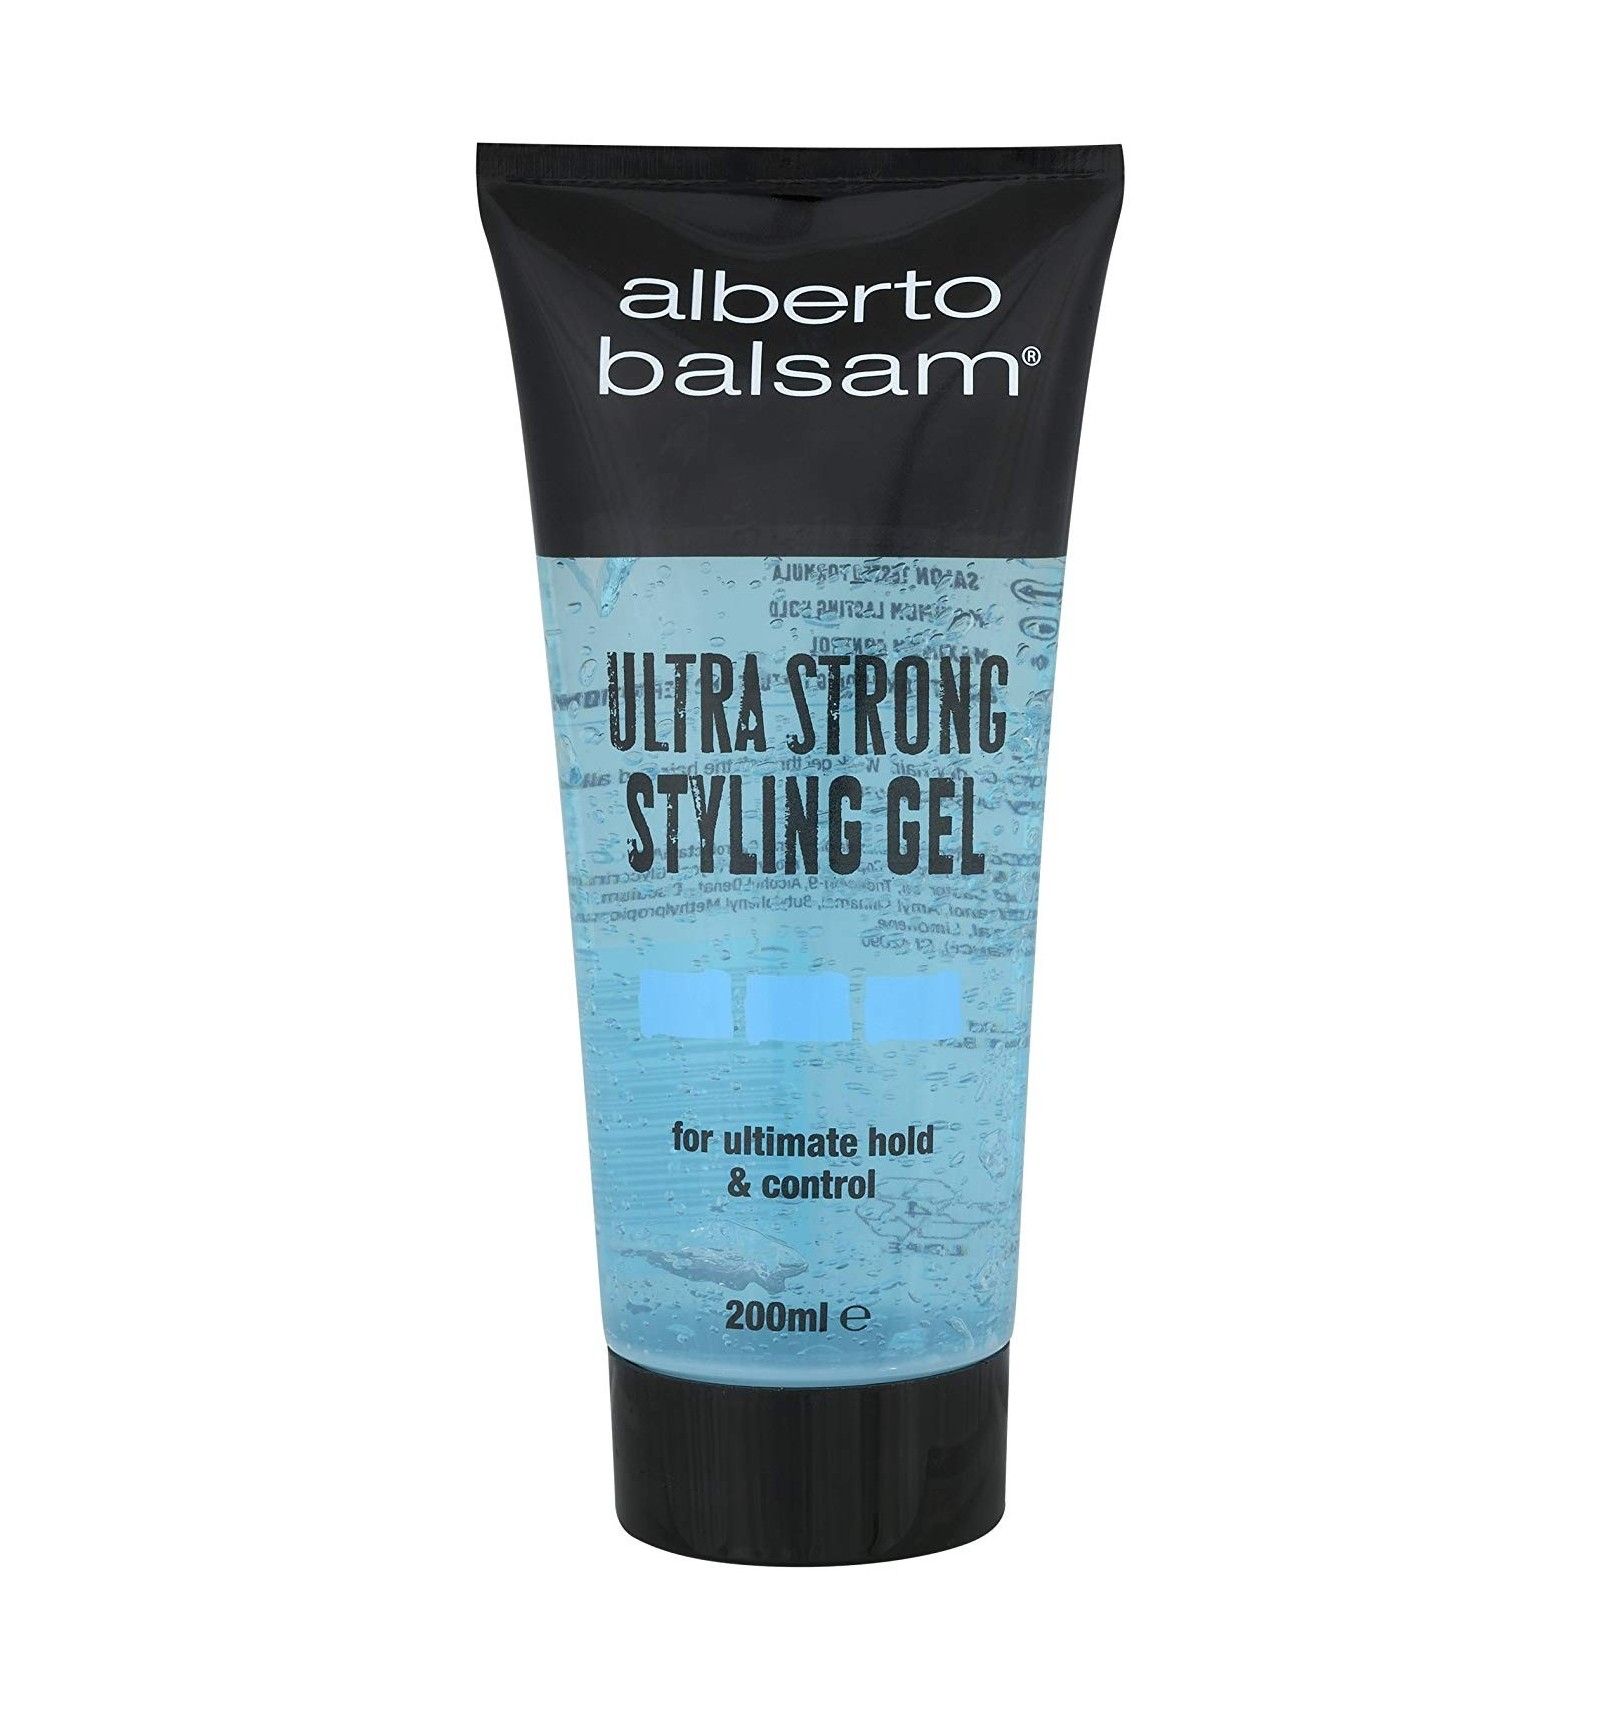 Alberto Balsam Styling Gel Ultra Strong - 200ml